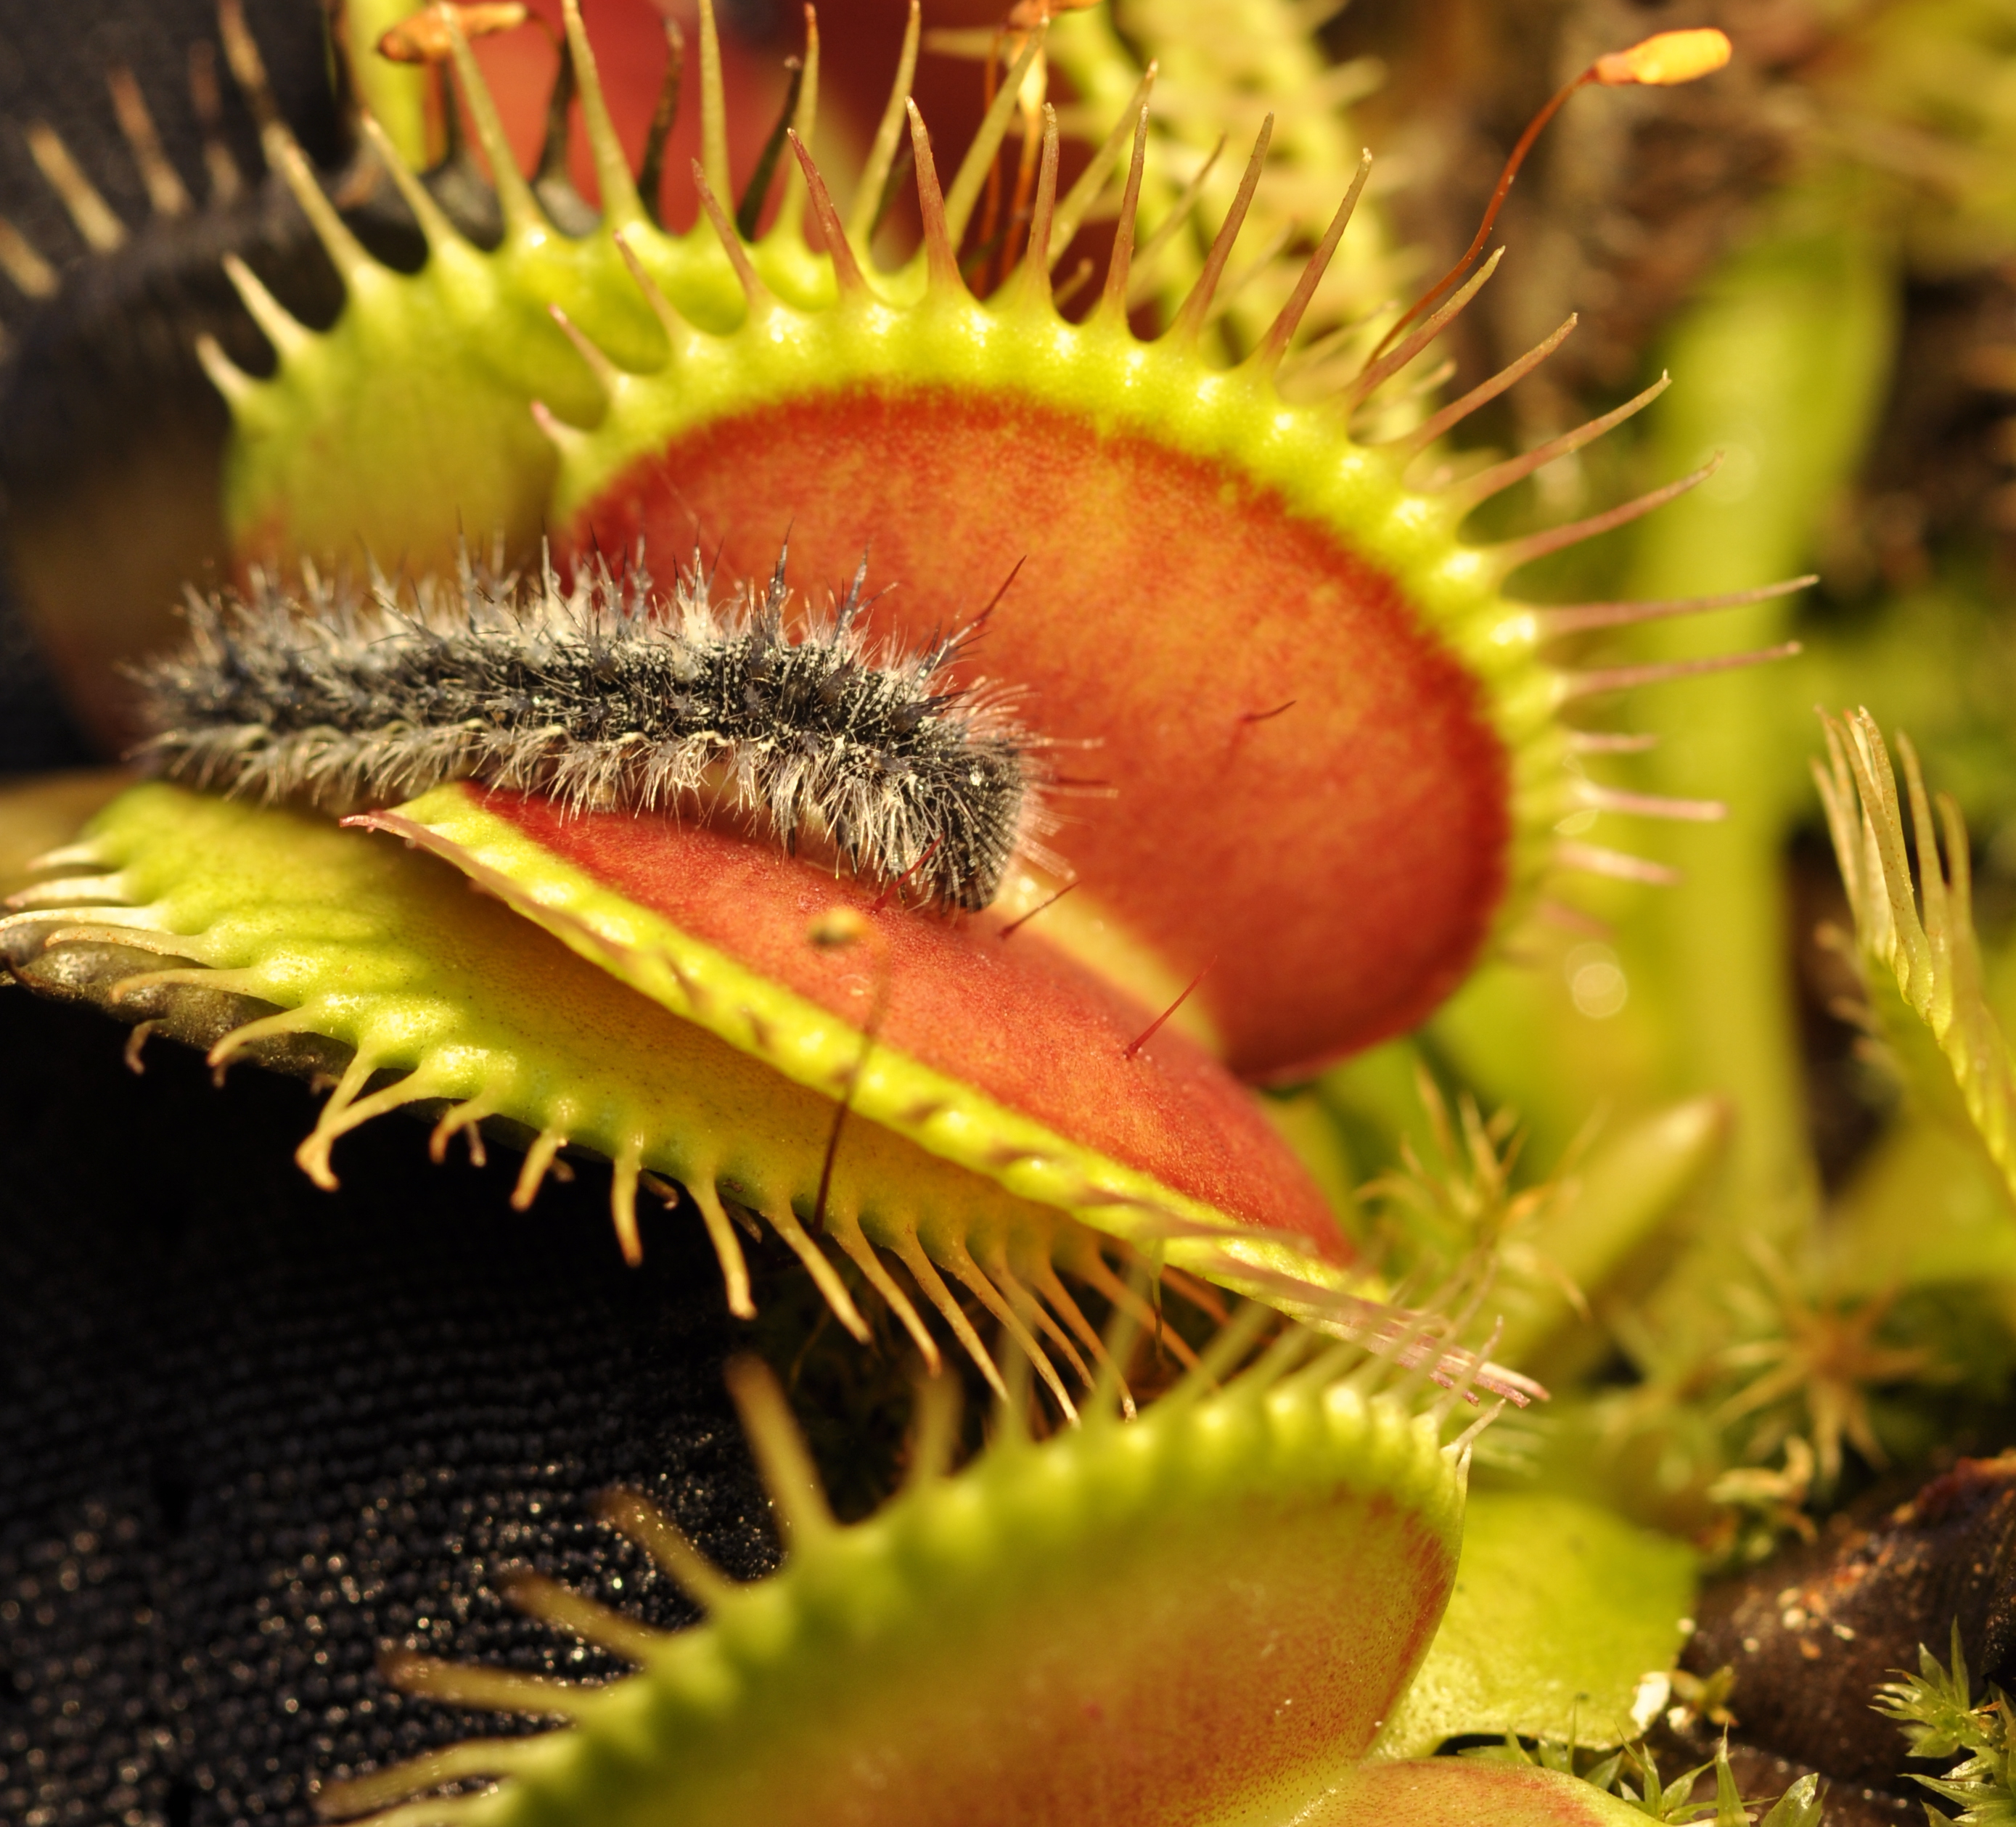 A potential meal stimulates the touch-sensitive trigger hairs inside a Venus flytrap. Credit: Soenke Scherzer